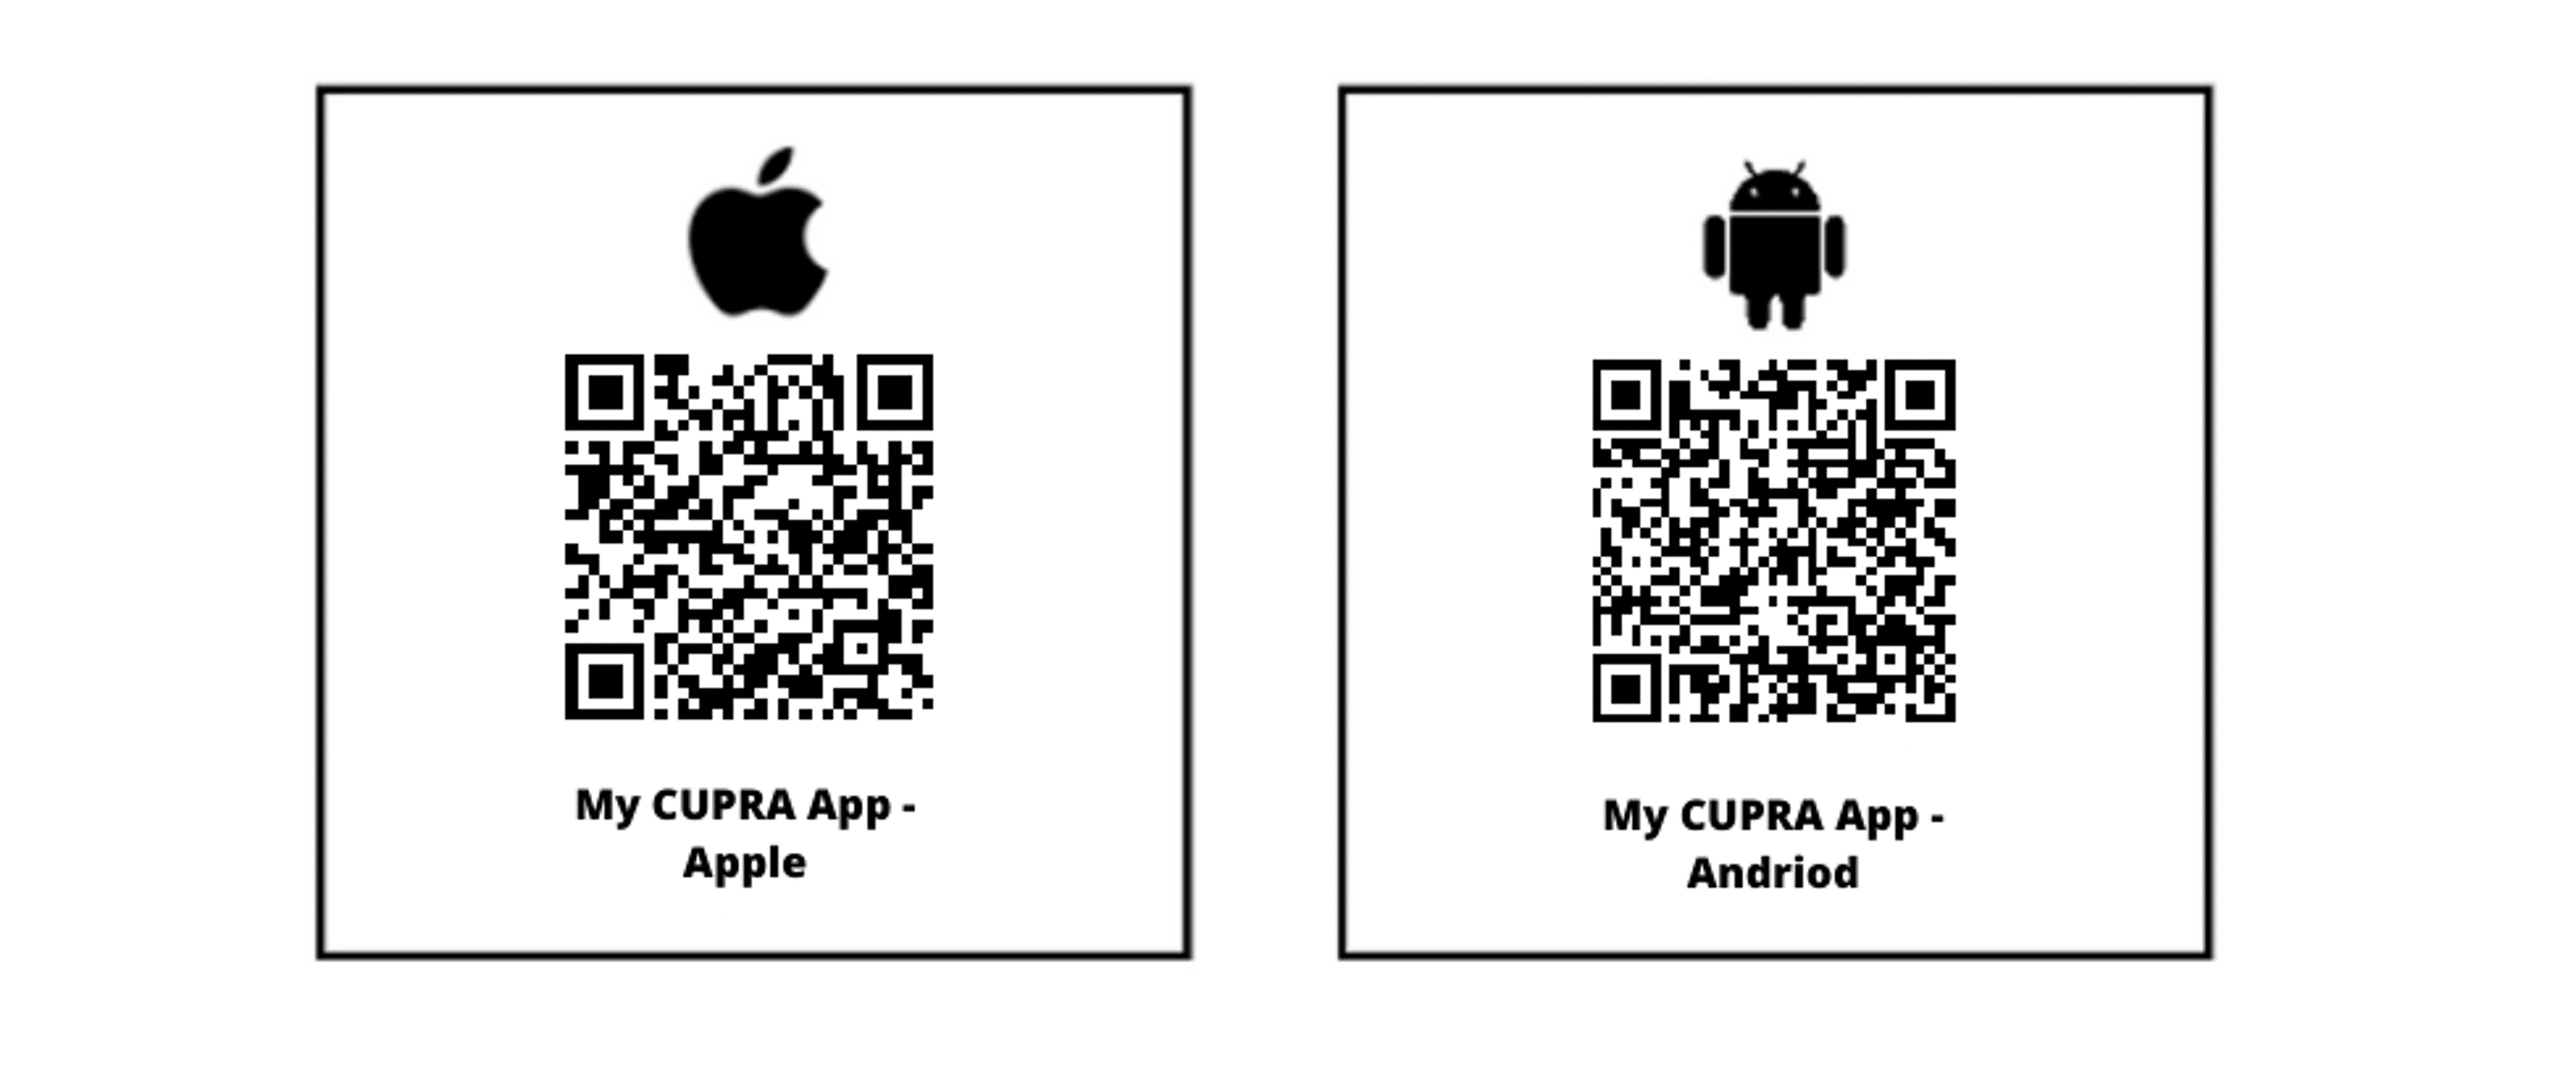 My CUPRA App - Apple